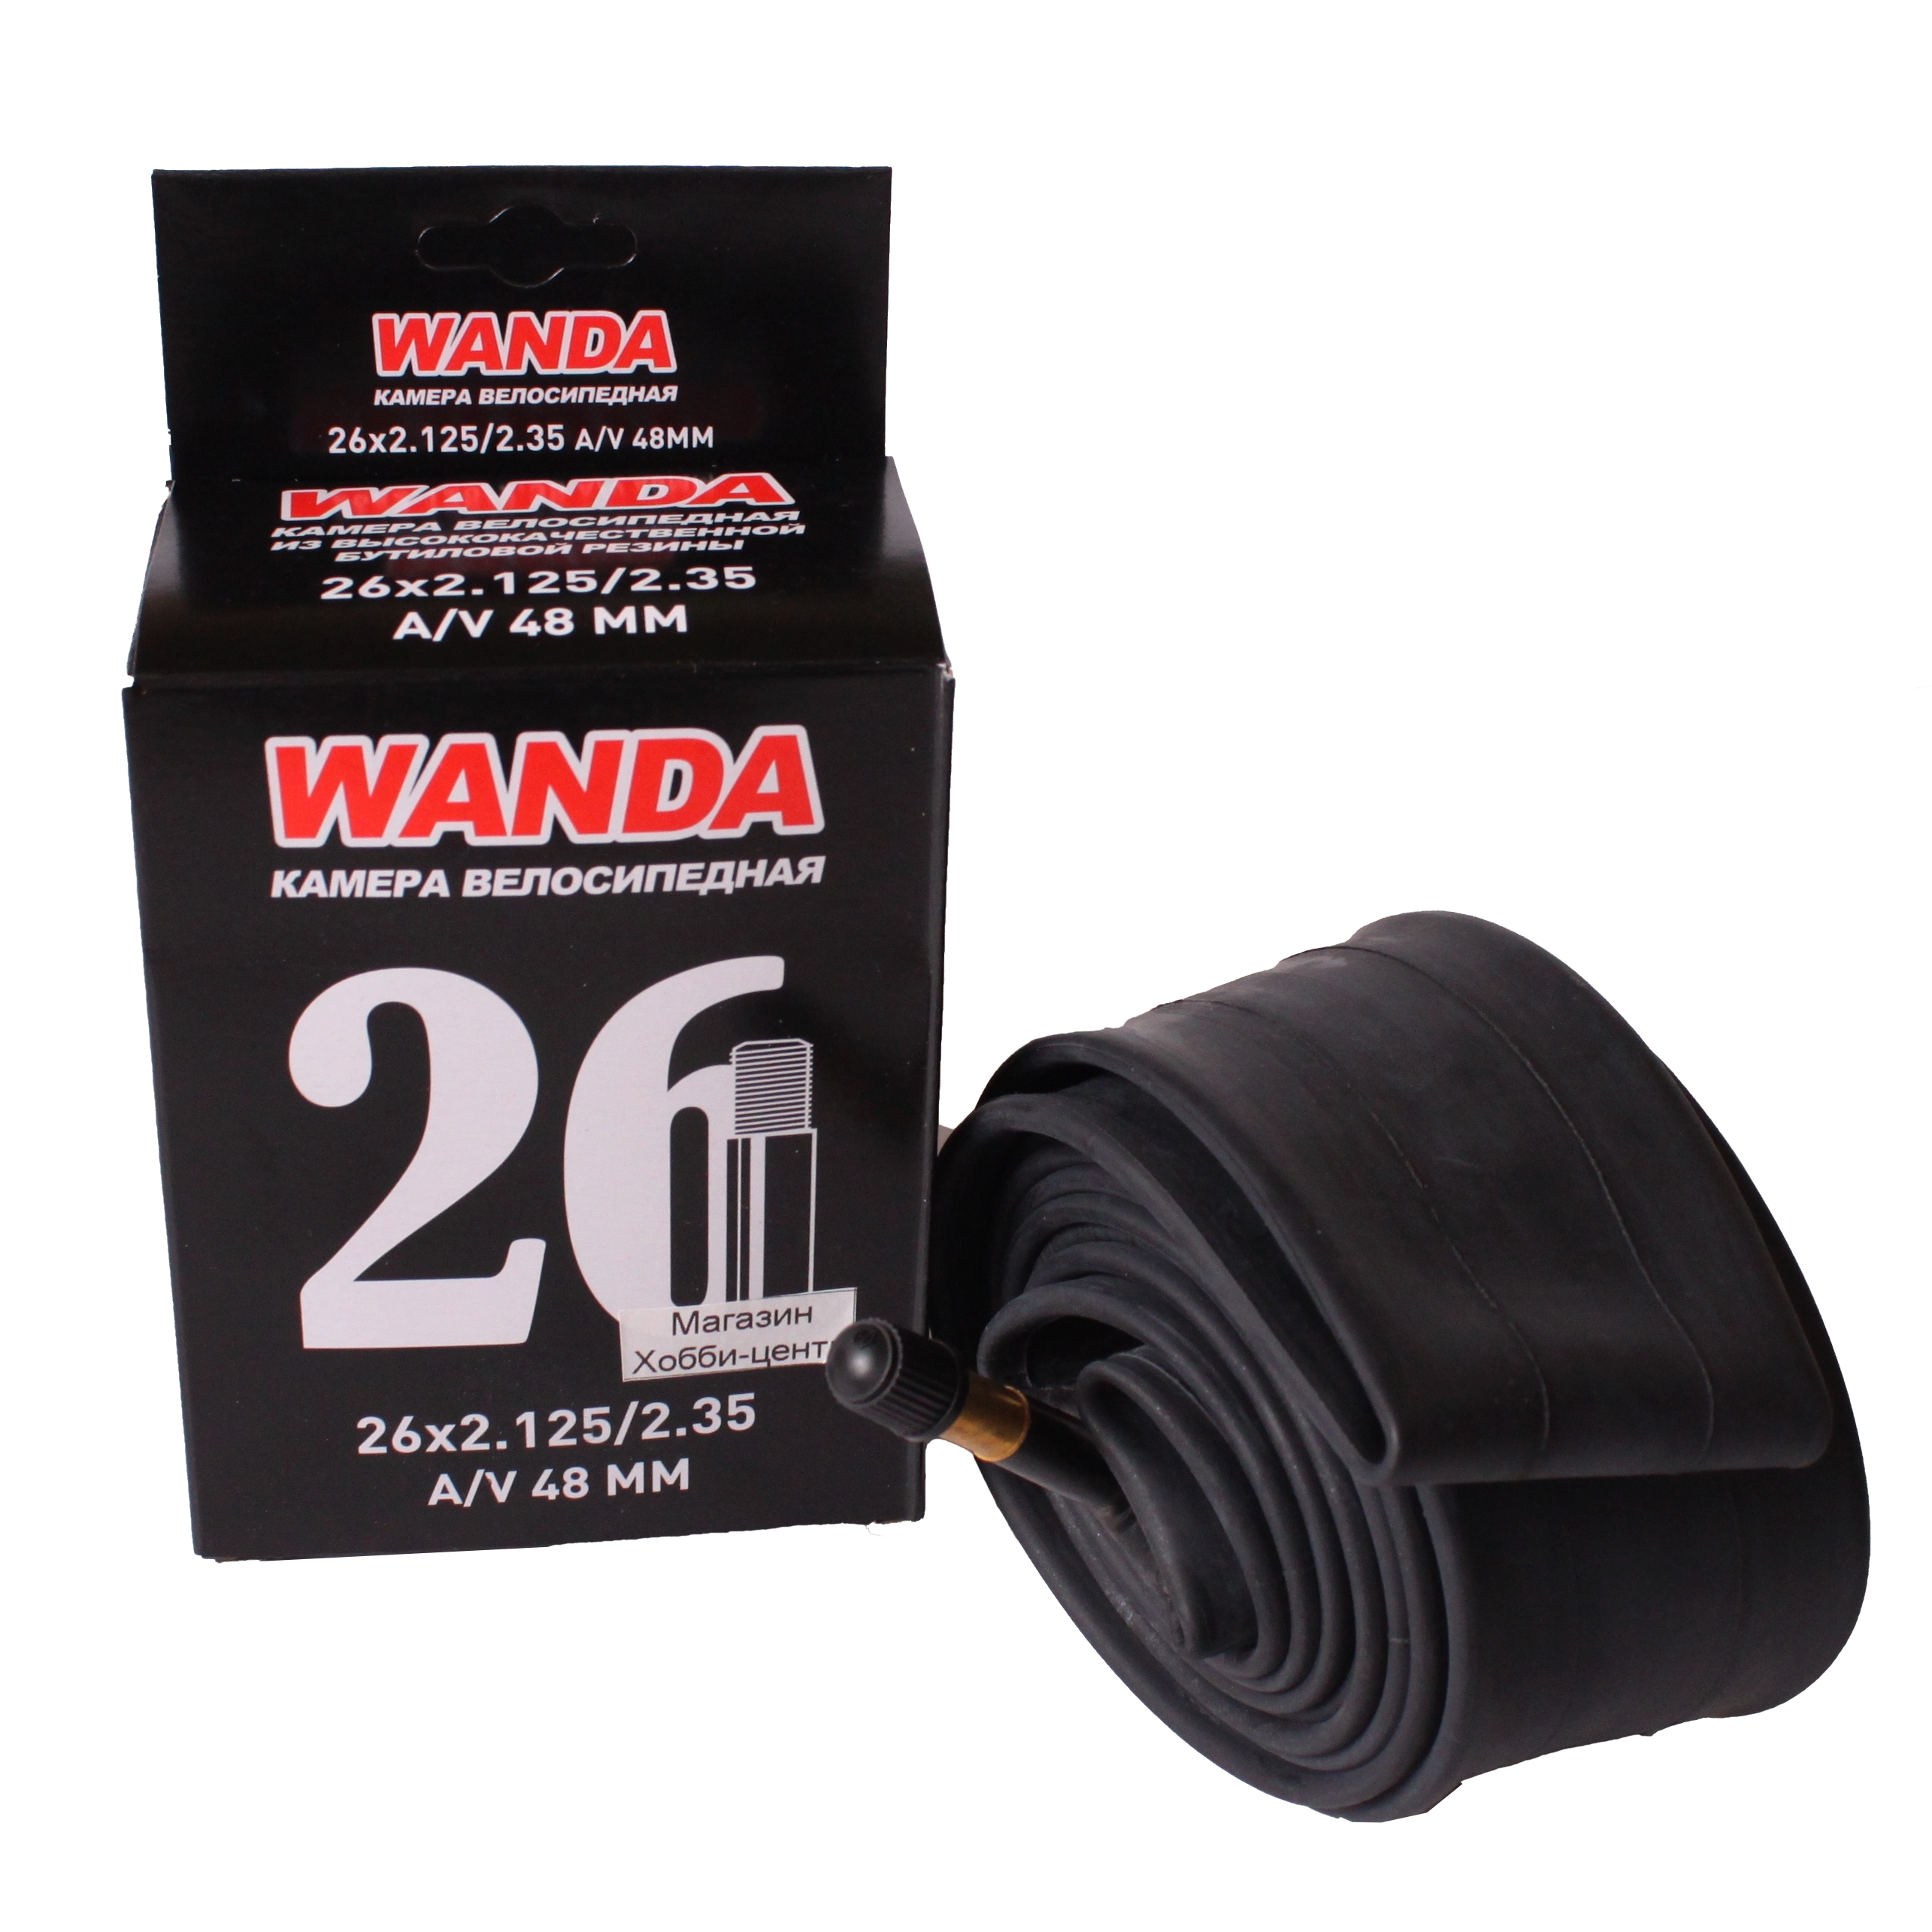 Камера 26. Камера 26х1.95/2.125 бутил a/v 48мм Wanda. Камера 27.5х1.95/2.125 бутил a/v 48мм Wanda. Камера 26х2.35 48 мм. Камера Wanda.